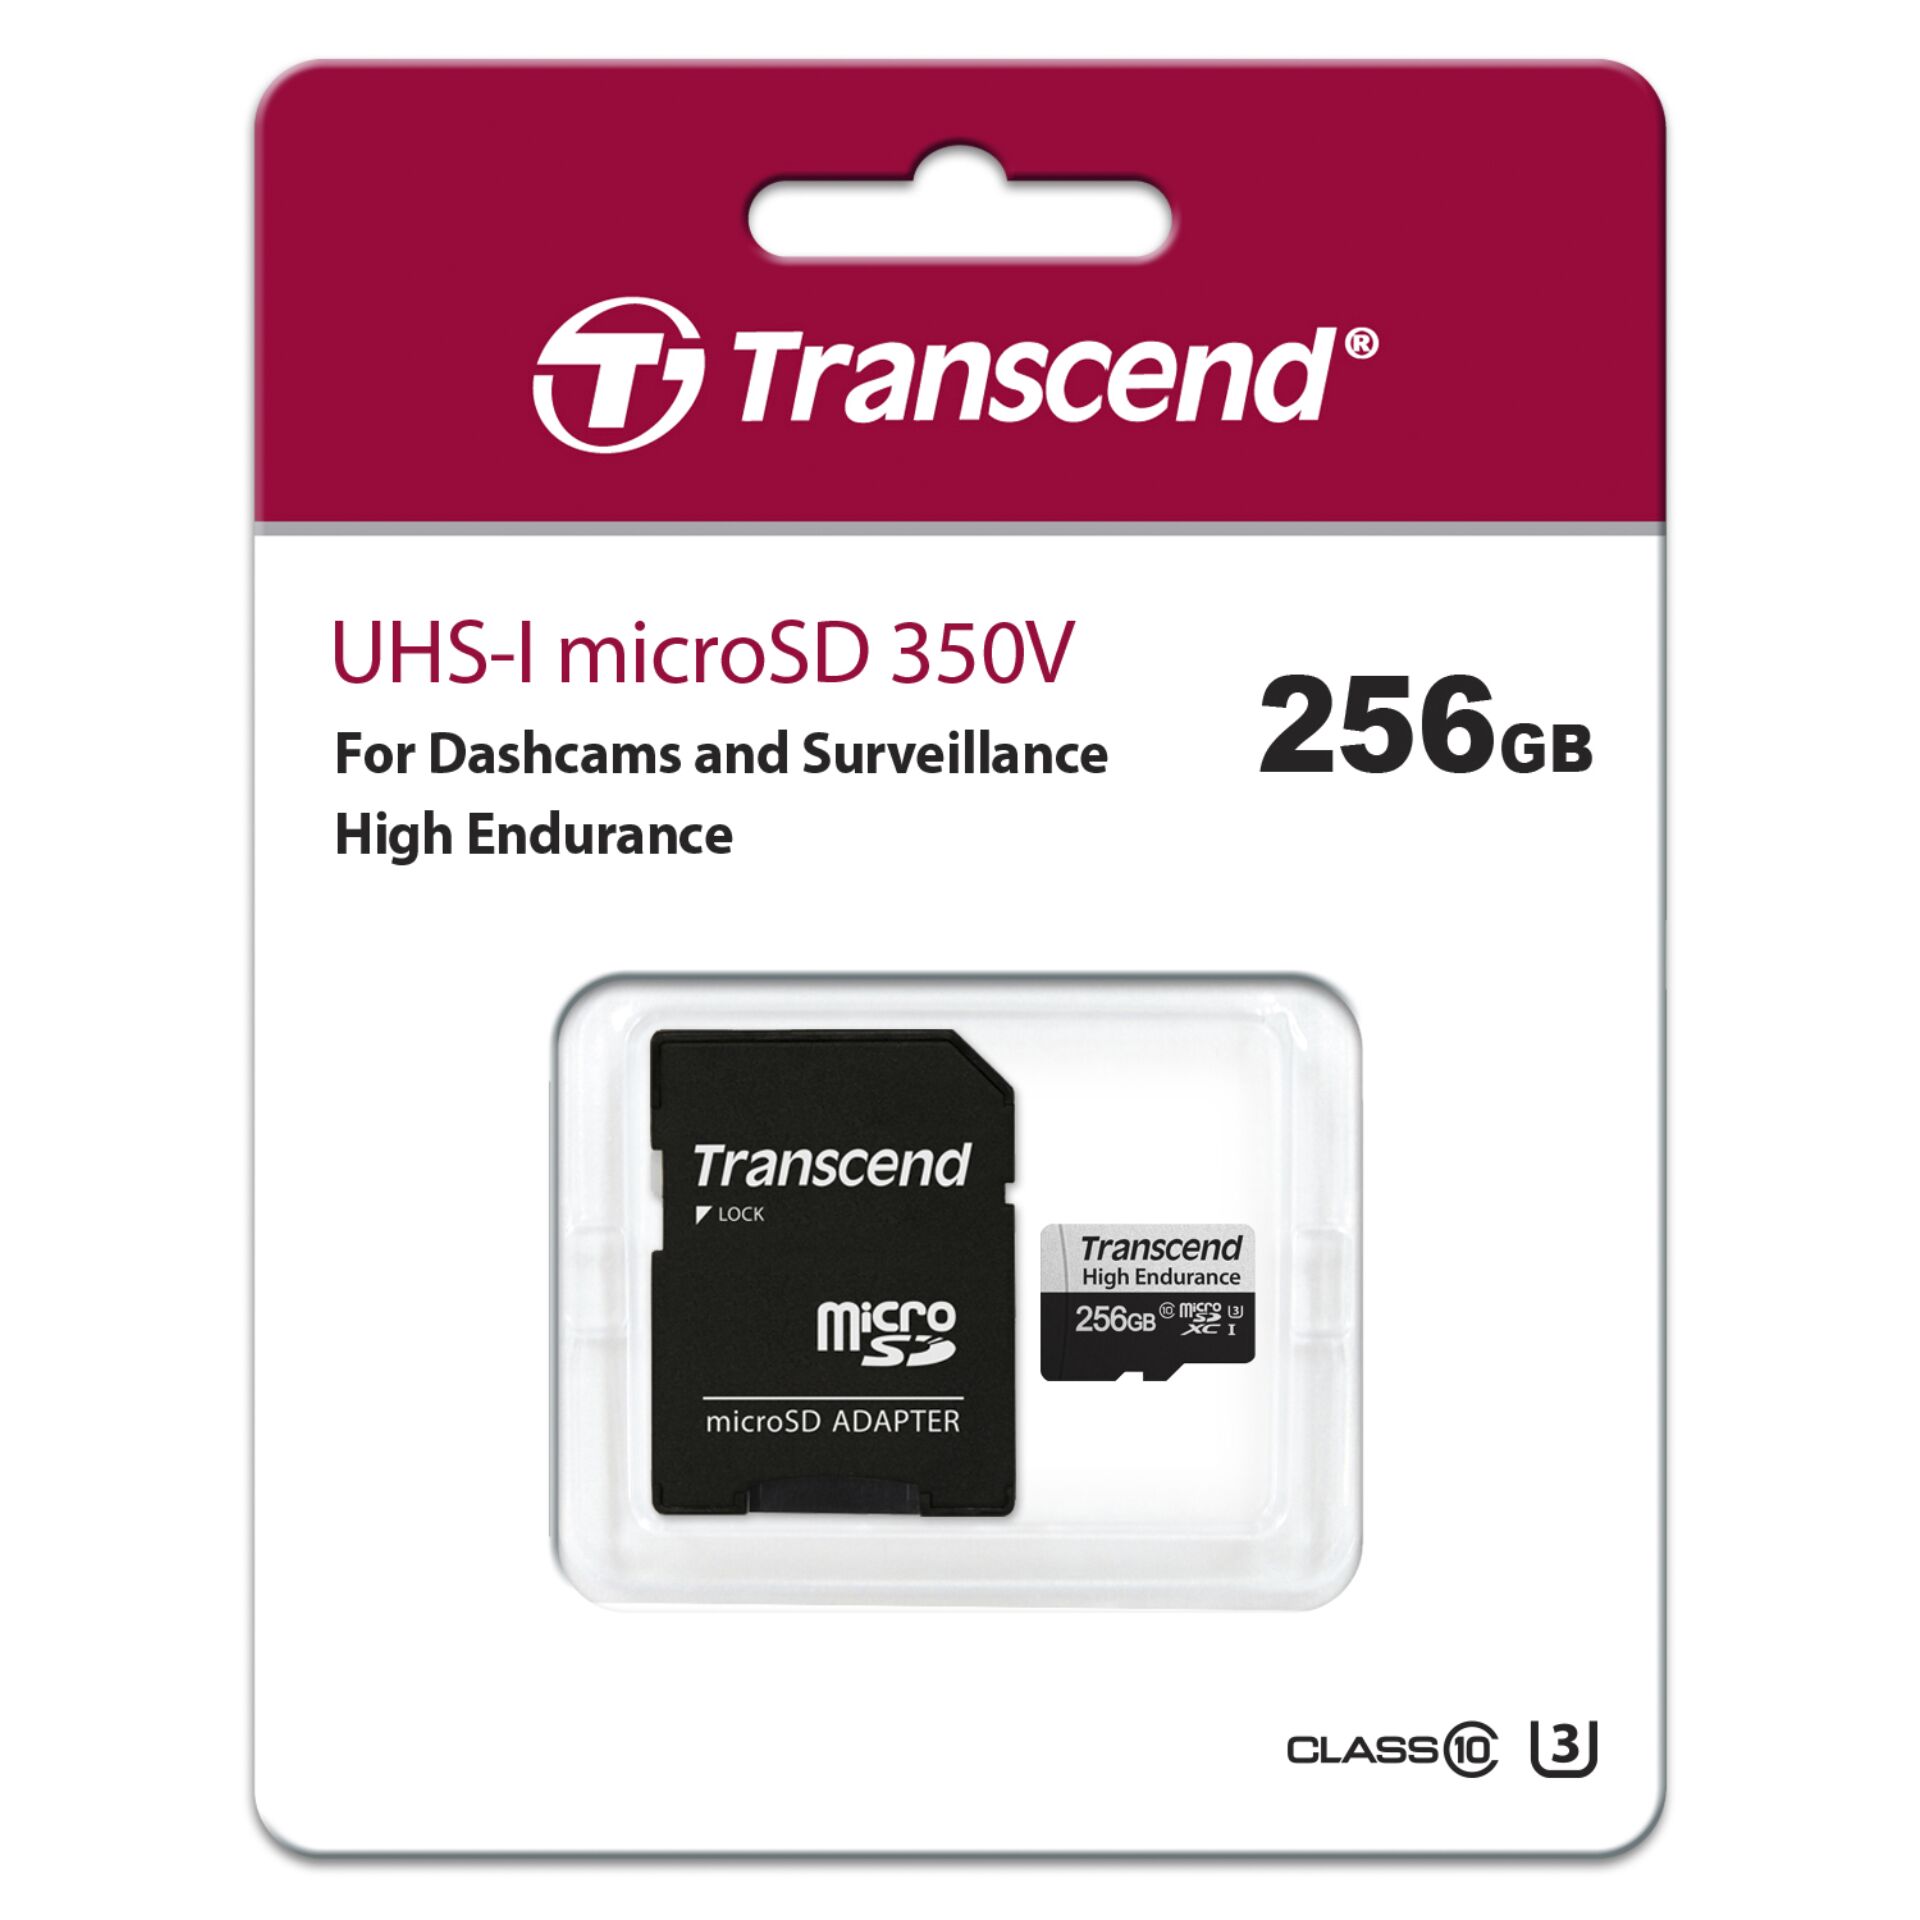 Transcend microSDXC 256GB 350V Class 10 UHS-I